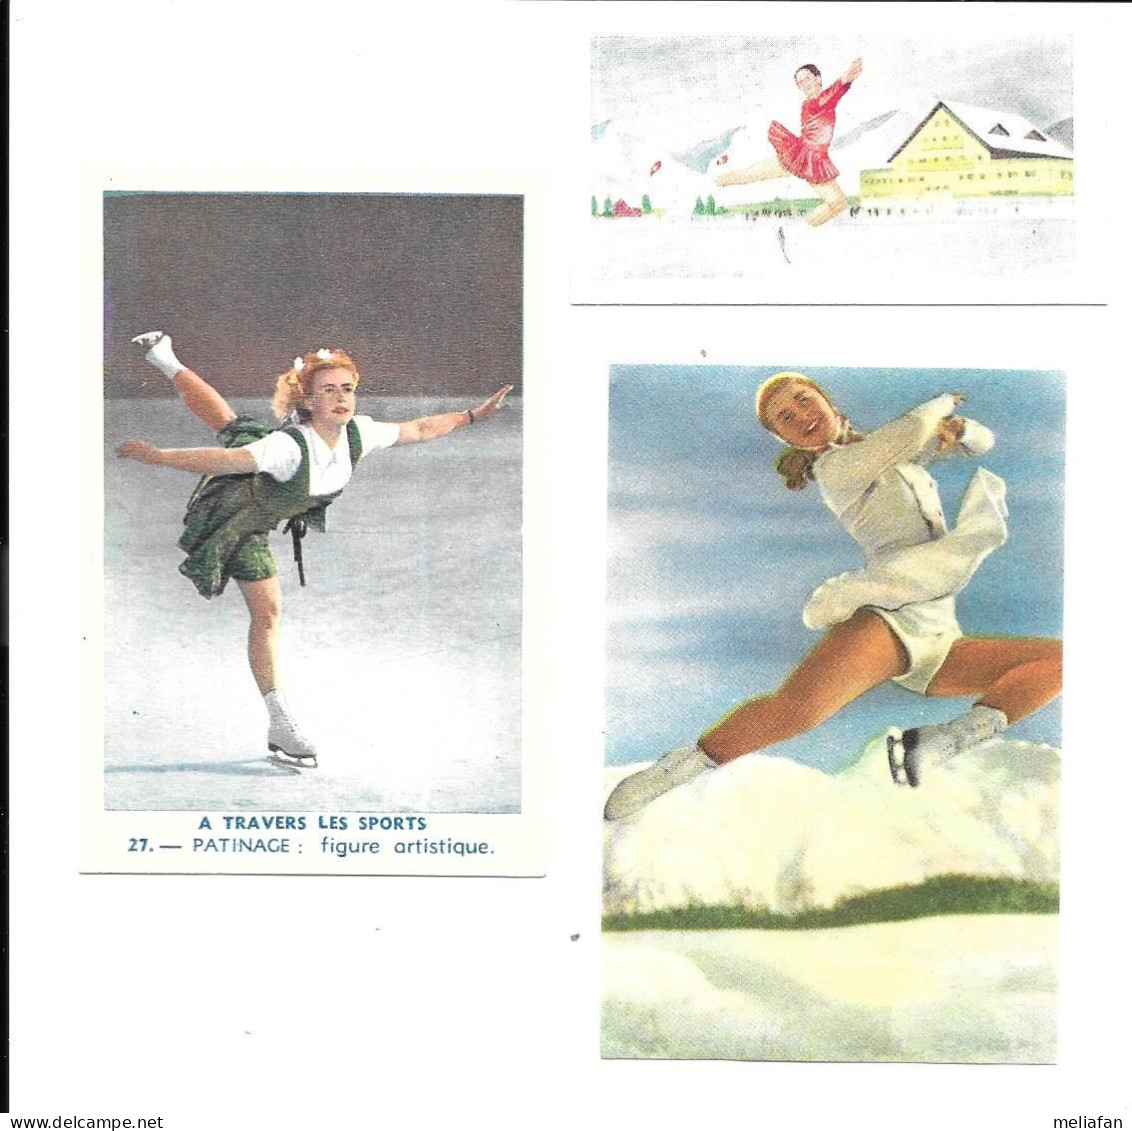 CY43 - IMAGES DIVERSES PATINAGE ARTISTIQUE - BARBARA ANN SCOTT  (droite) - Skating (Figure)